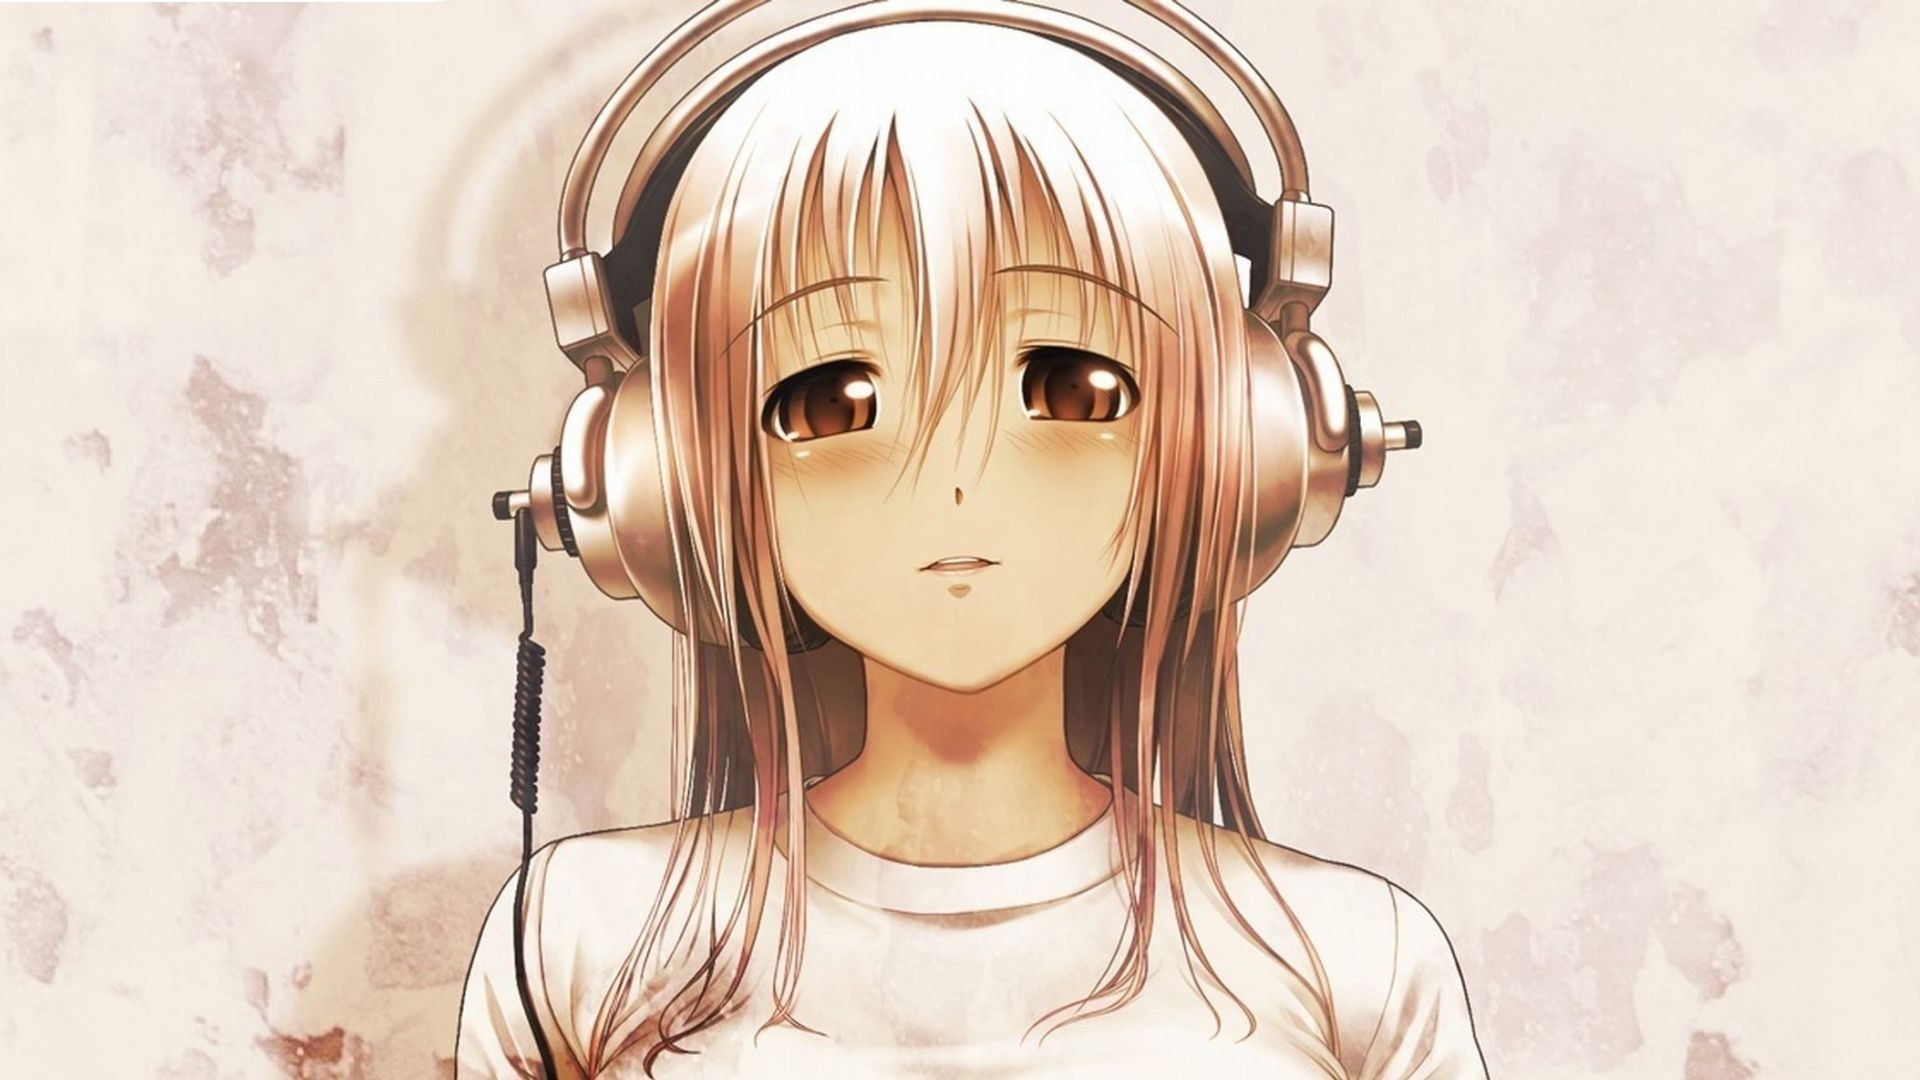 Desktop Wallpaper Cute Anime Girl Listening Songs Original Hd Image  Picture Background 4e8fe0